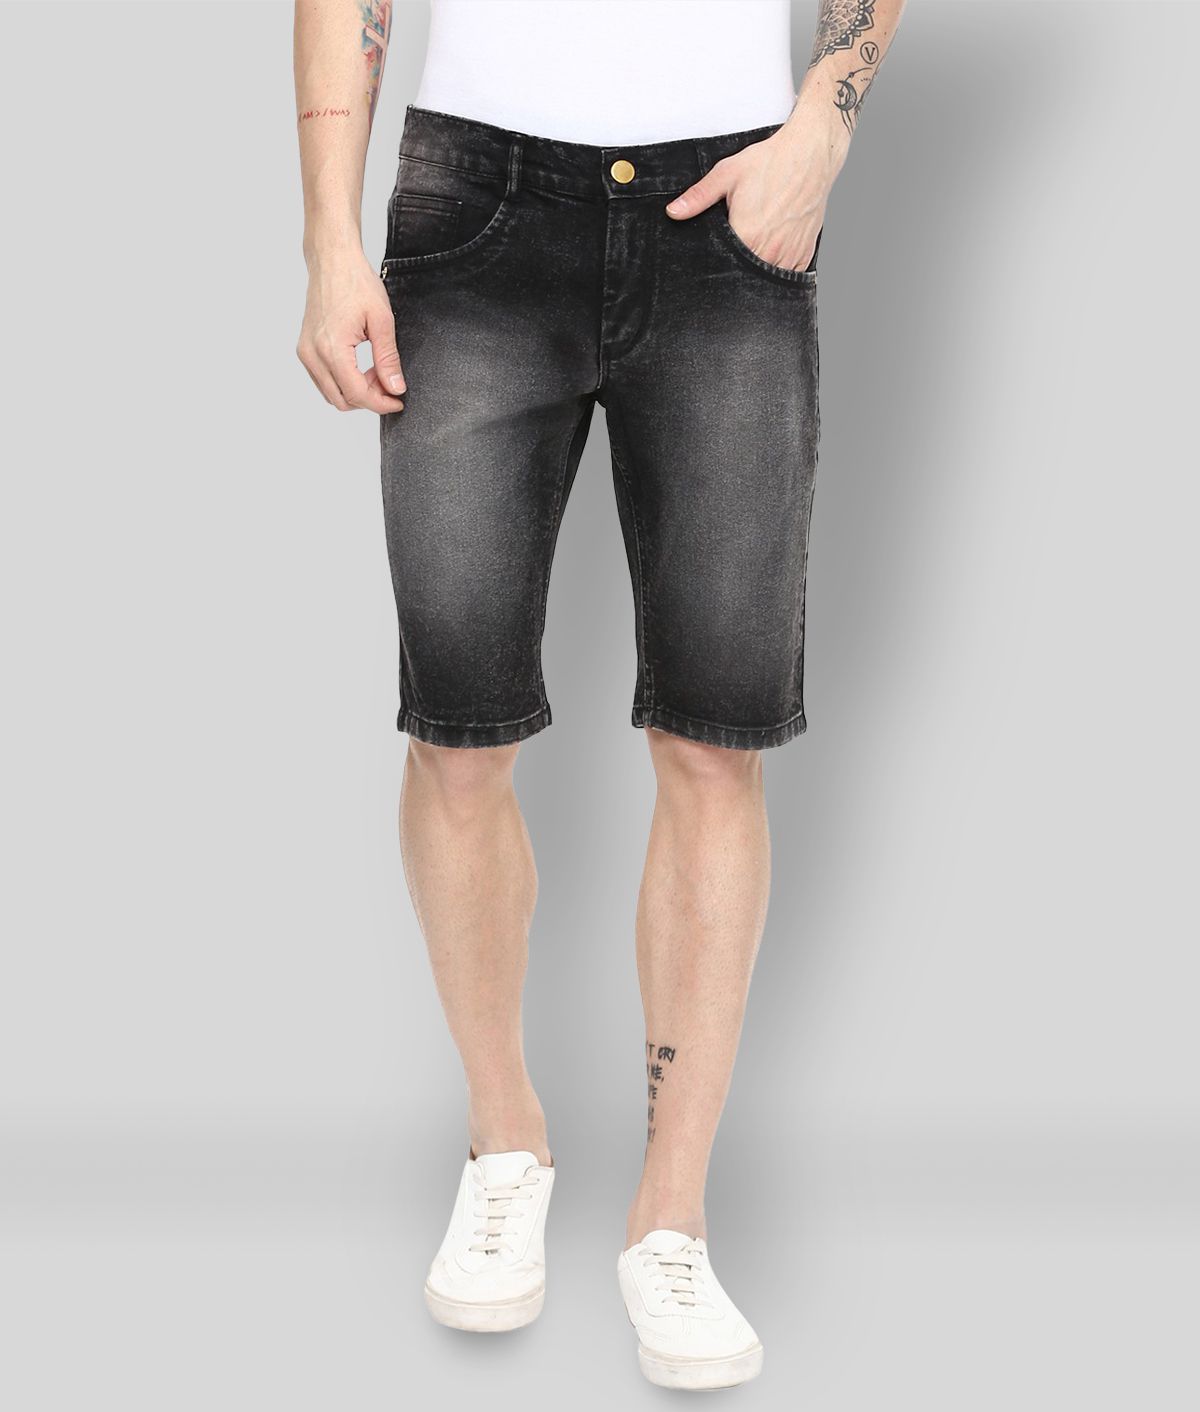 Urbano Fashion - Black Cotton Men's Denim Shorts ( Pack of 1 )